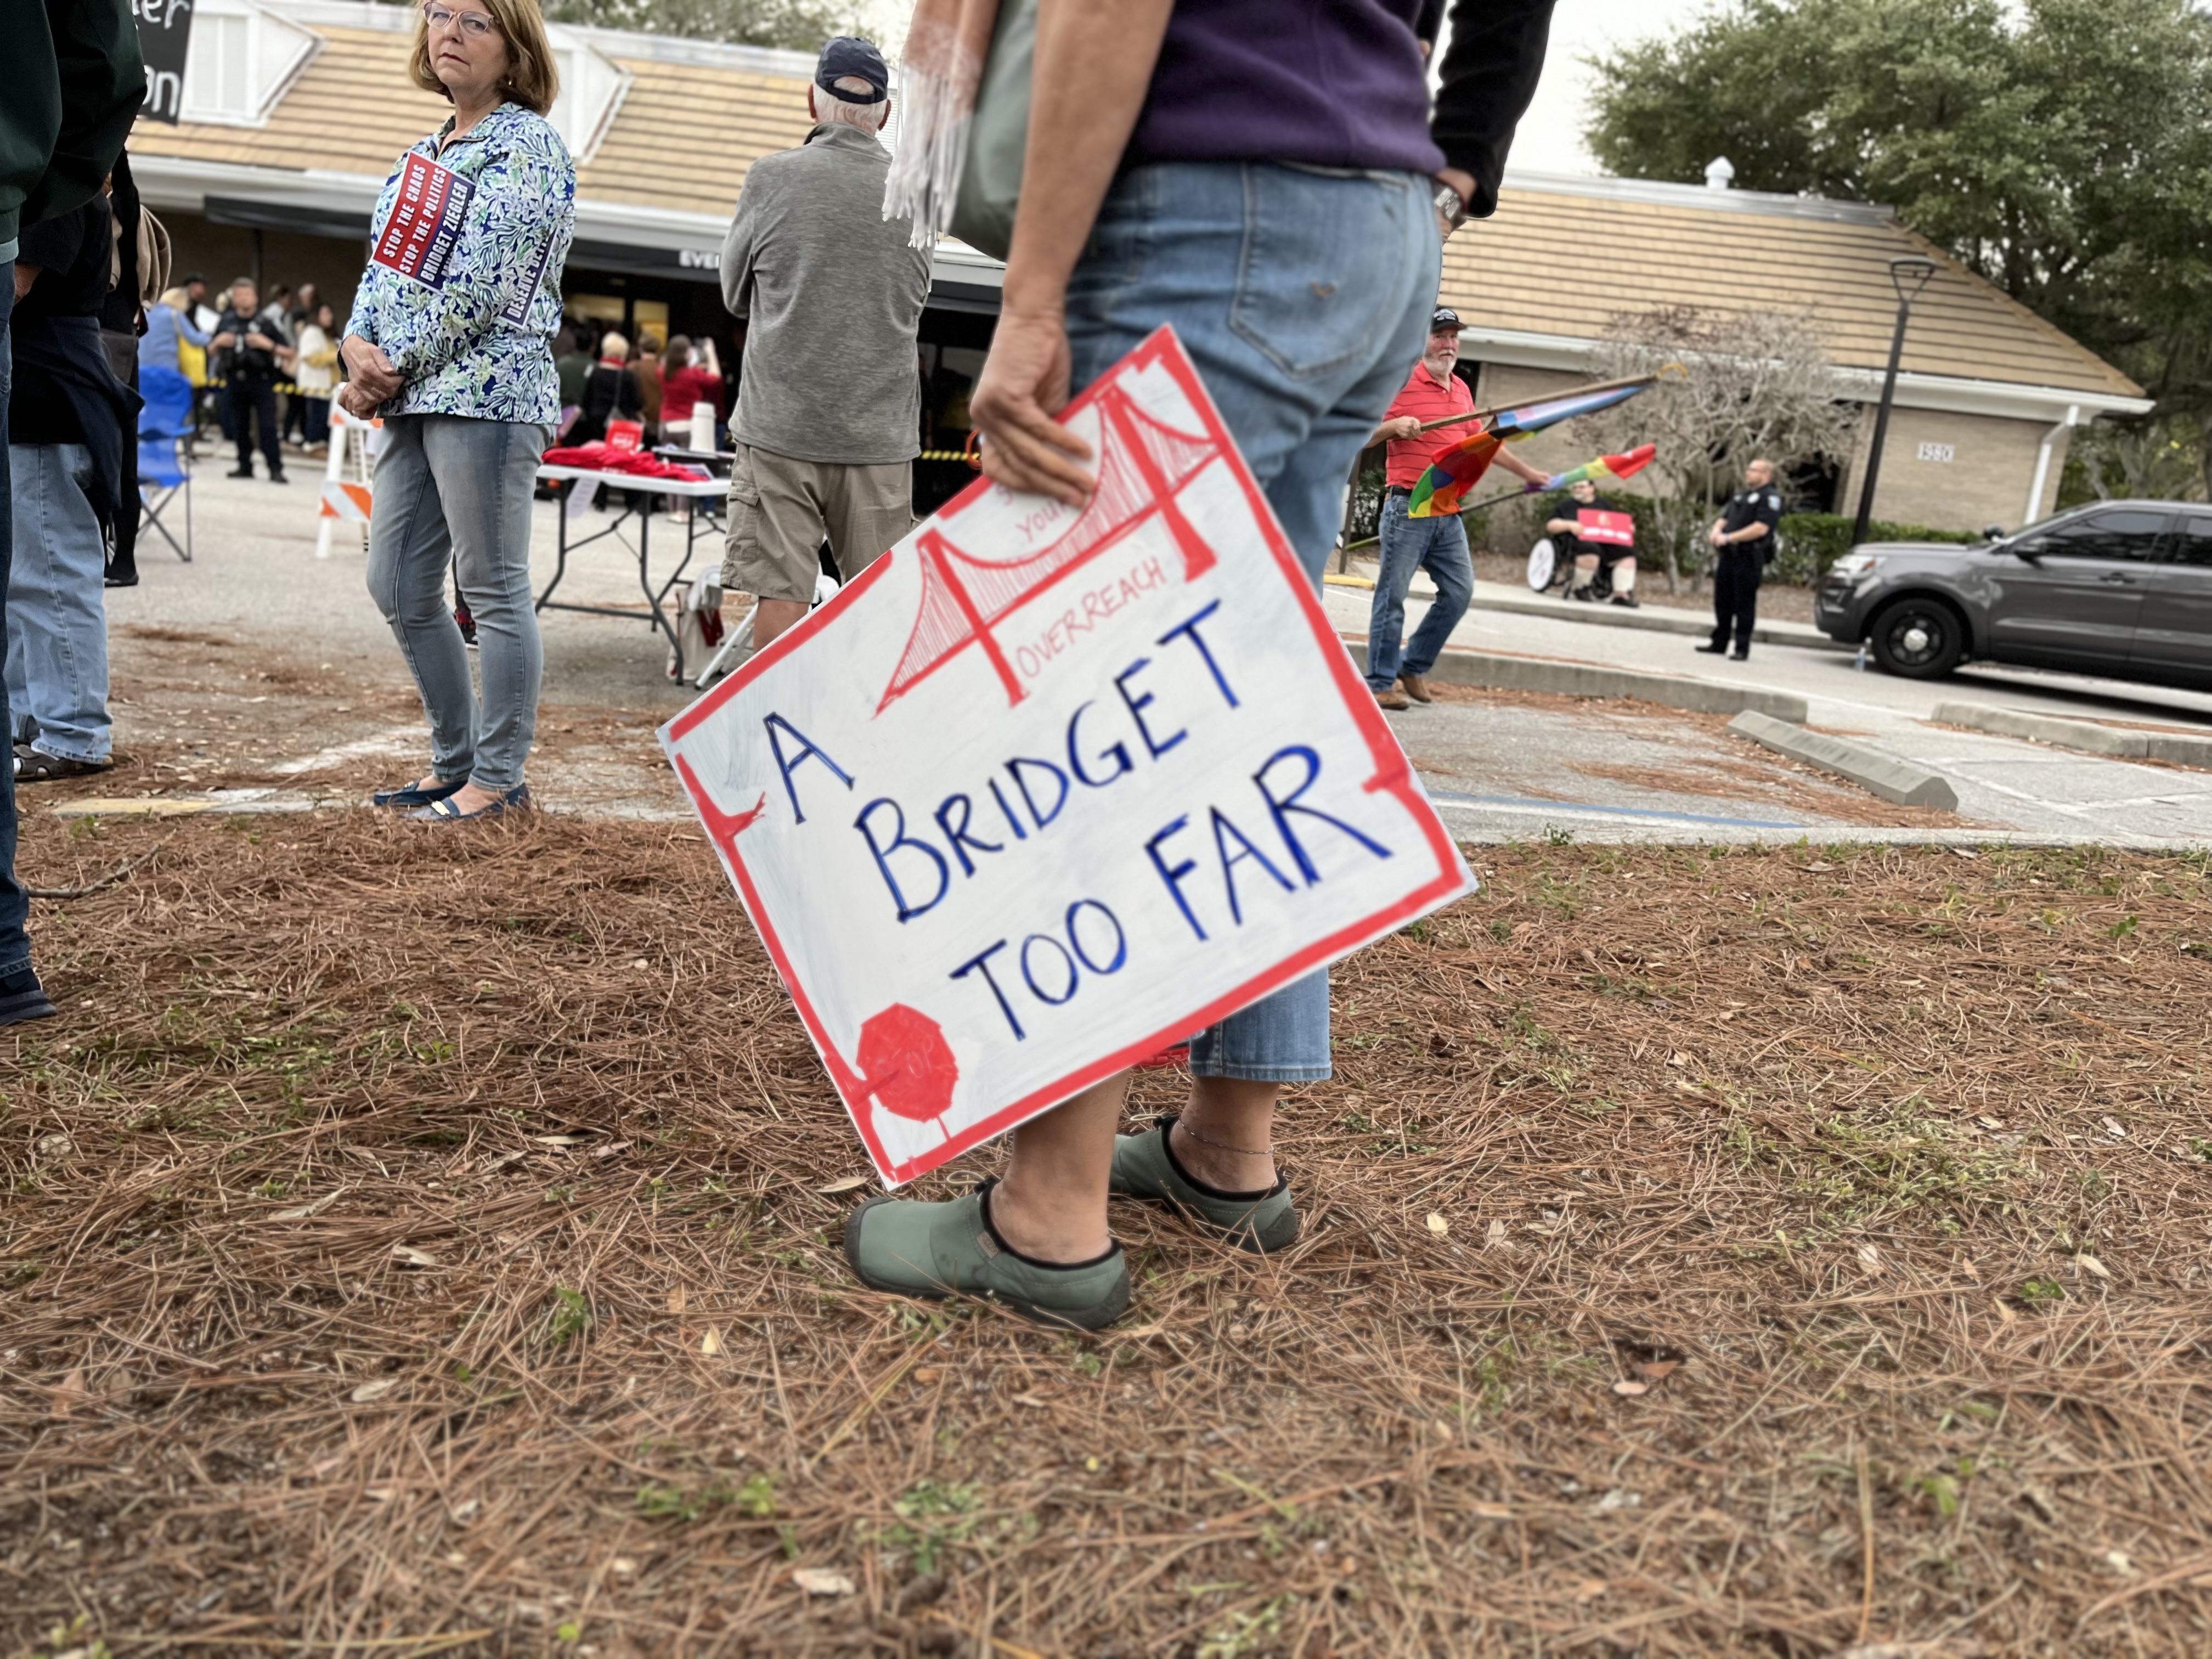 Florida School Board Urges Bridget Ziegler To Resign Amid Scandal